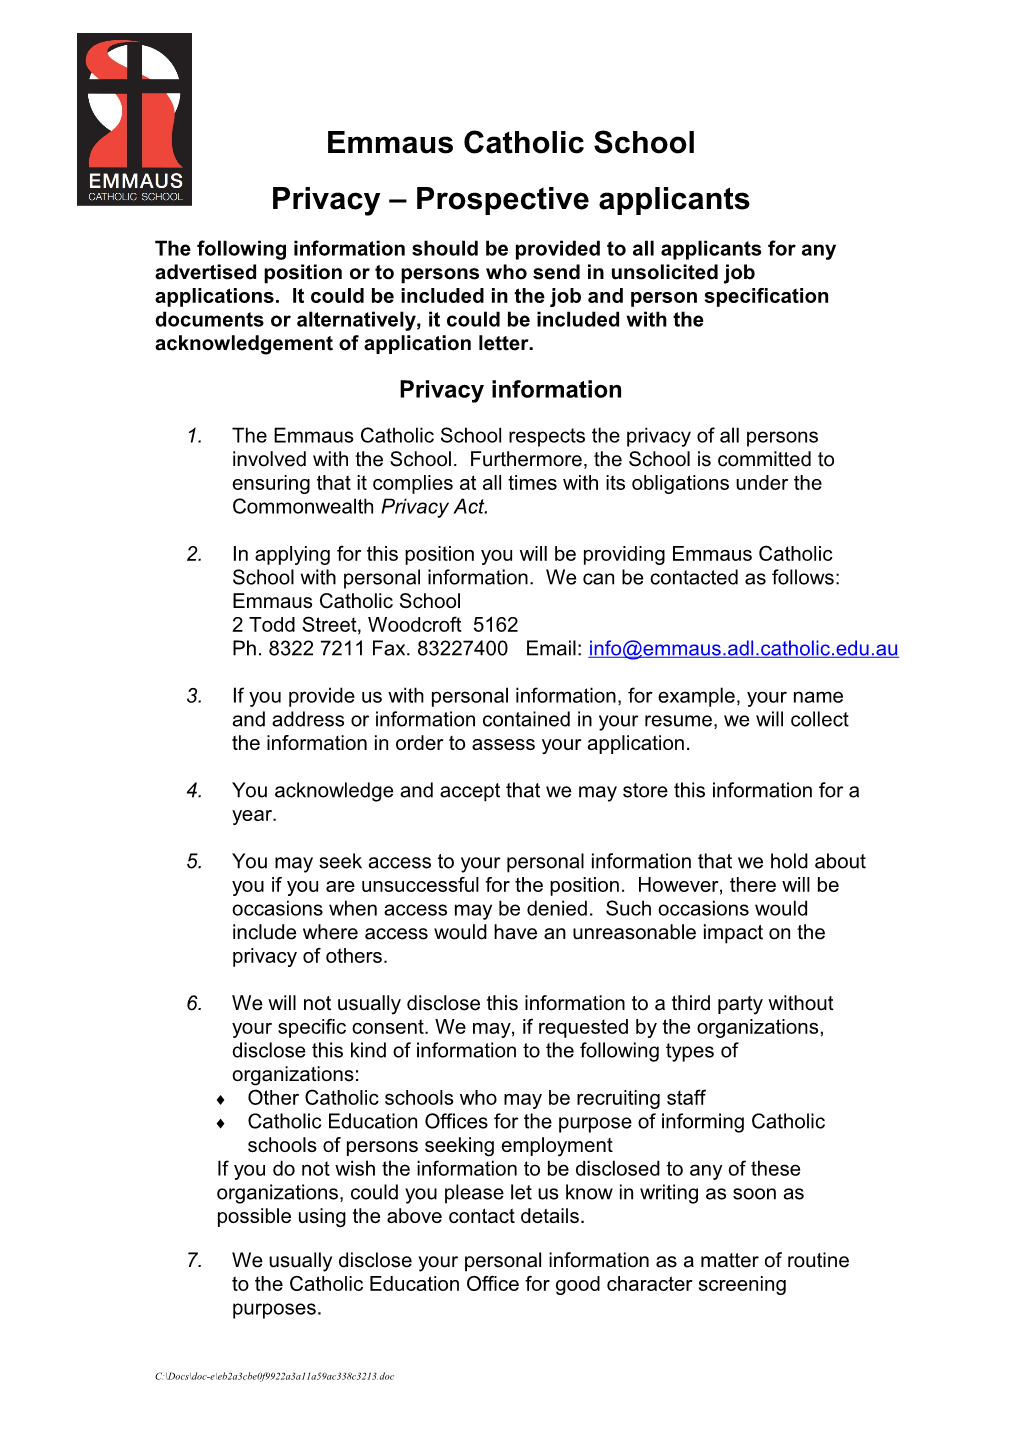 Privacy Prospective Applicants (Schools)